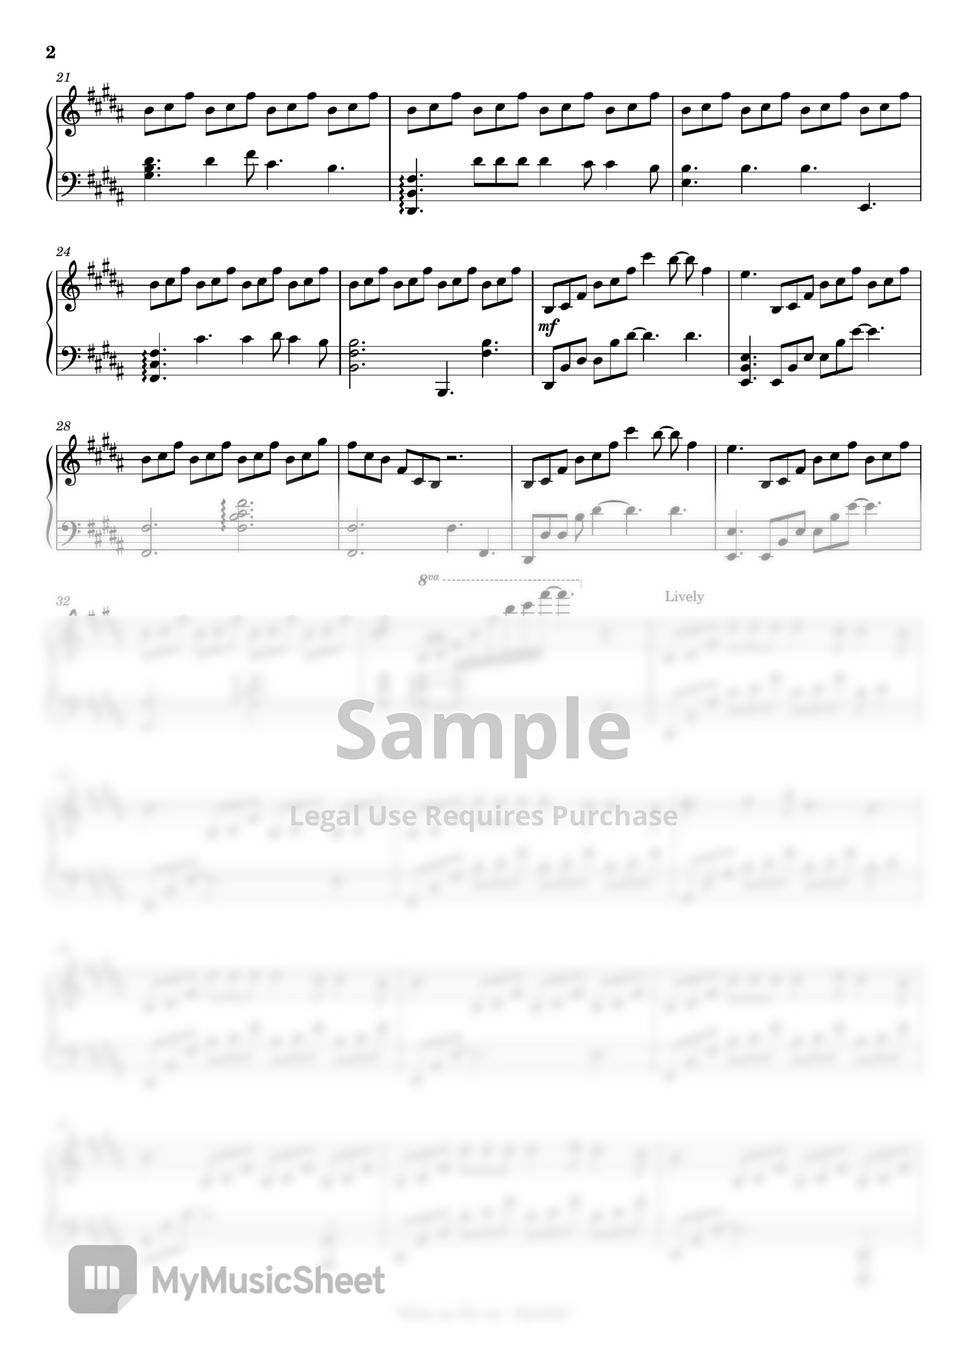 RADWIMPS - Sparkle - RADWIMPS (Kimi no Na wa/Your Name) Piano by BWC Piano Tutorial